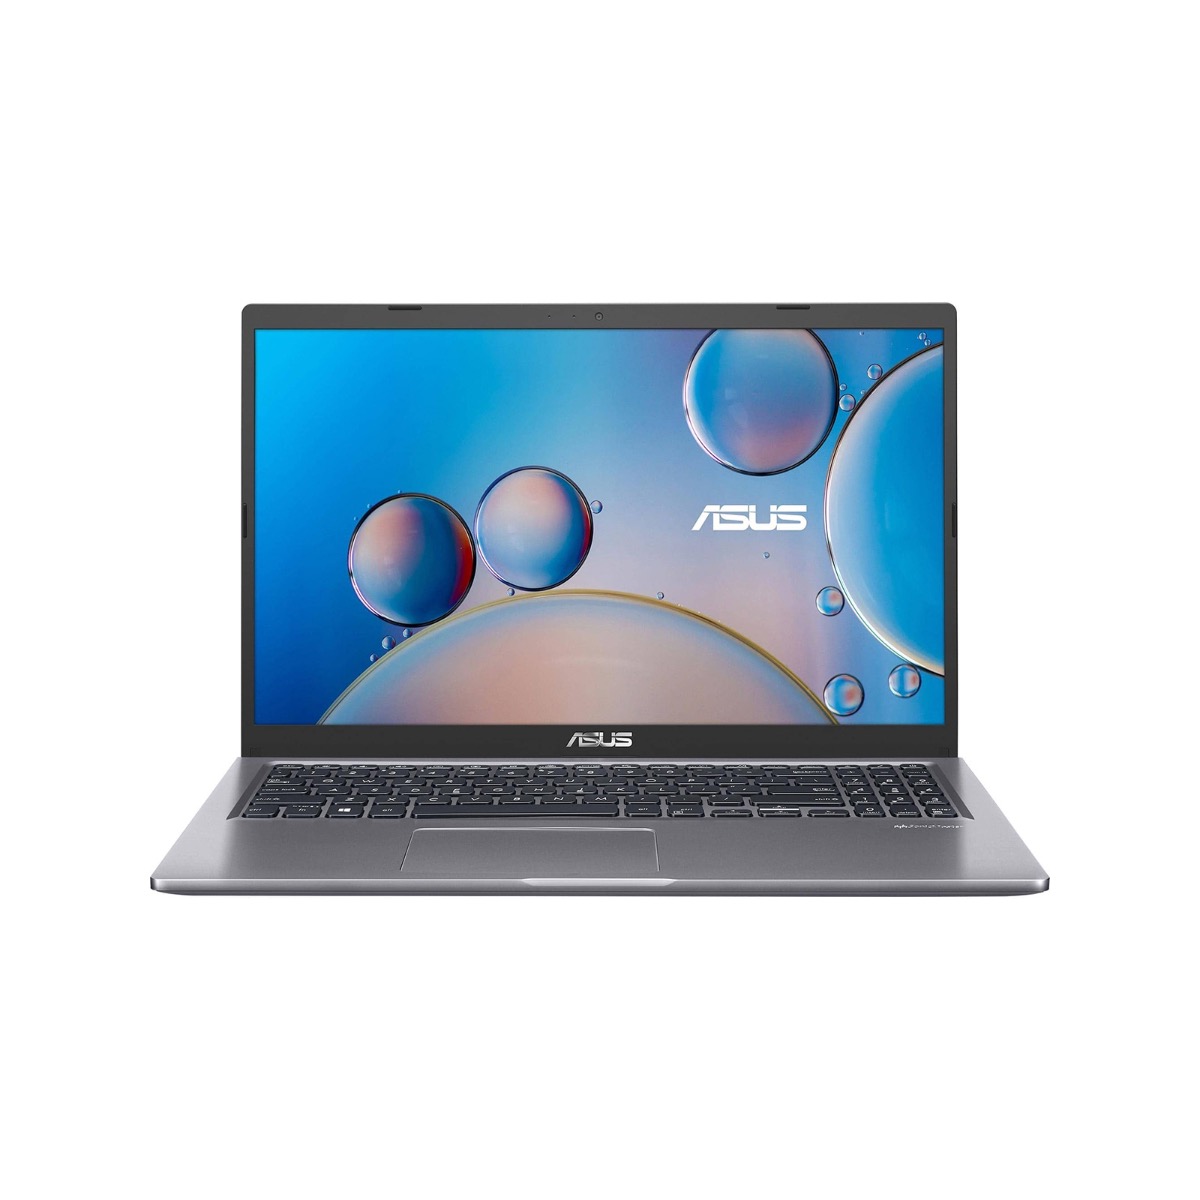 Asus-X515MA-C41G0W-JD-Asus-X515MA-C41G0W-JD-X515MA-C41G0W-JD-Laptops | LaptopSA.co.za a division of the notebook company 